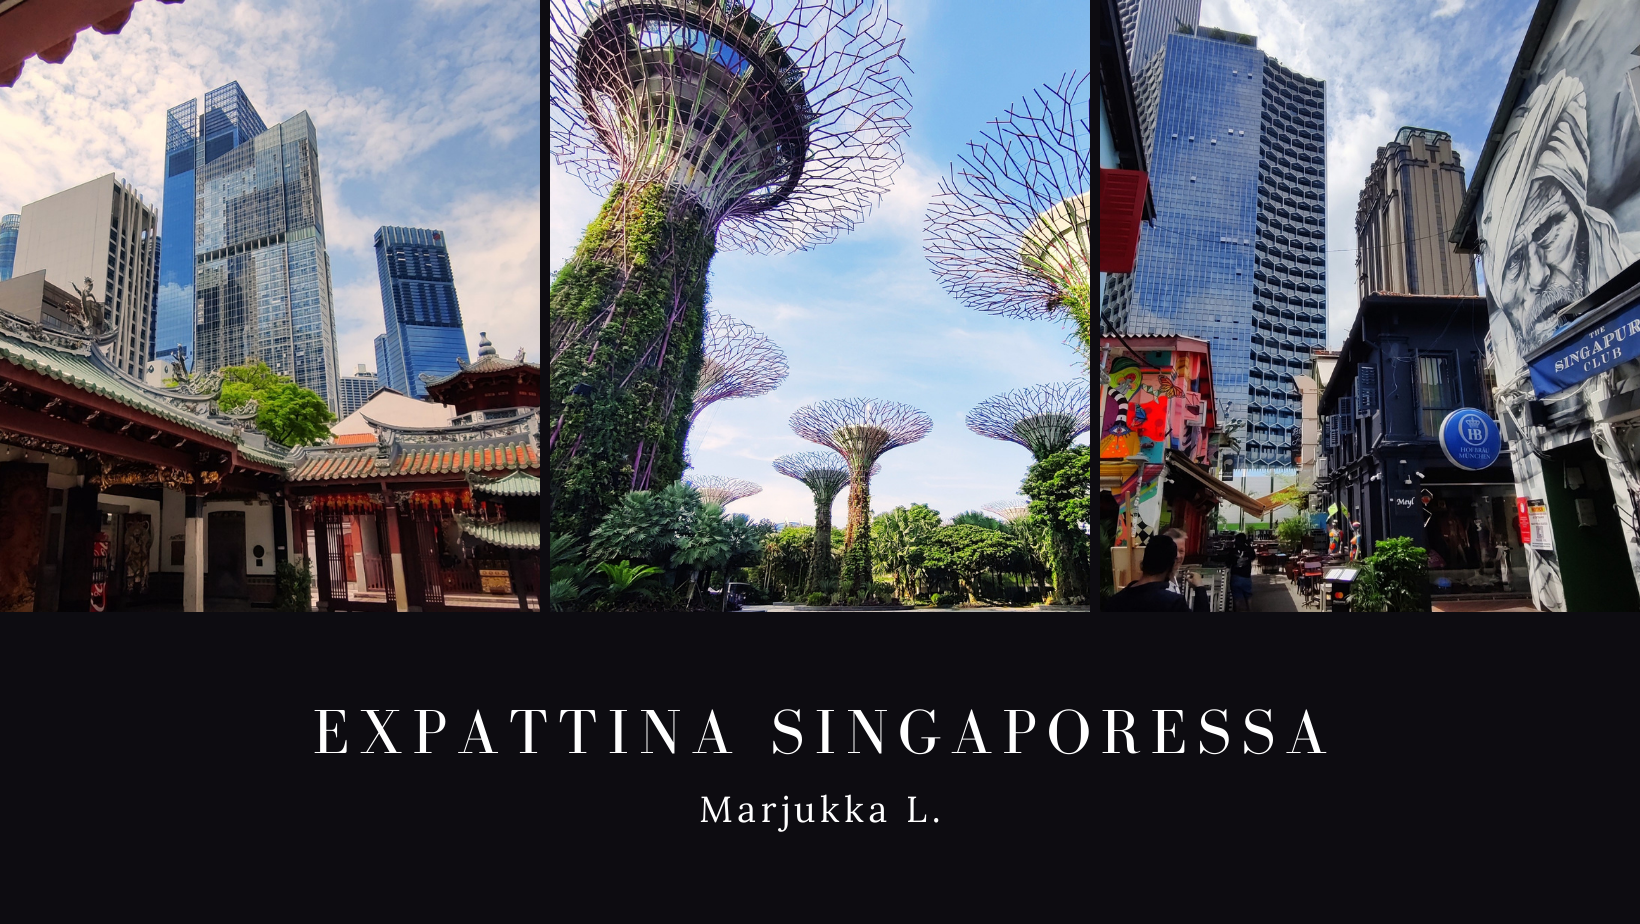 Expattina Singaporessa